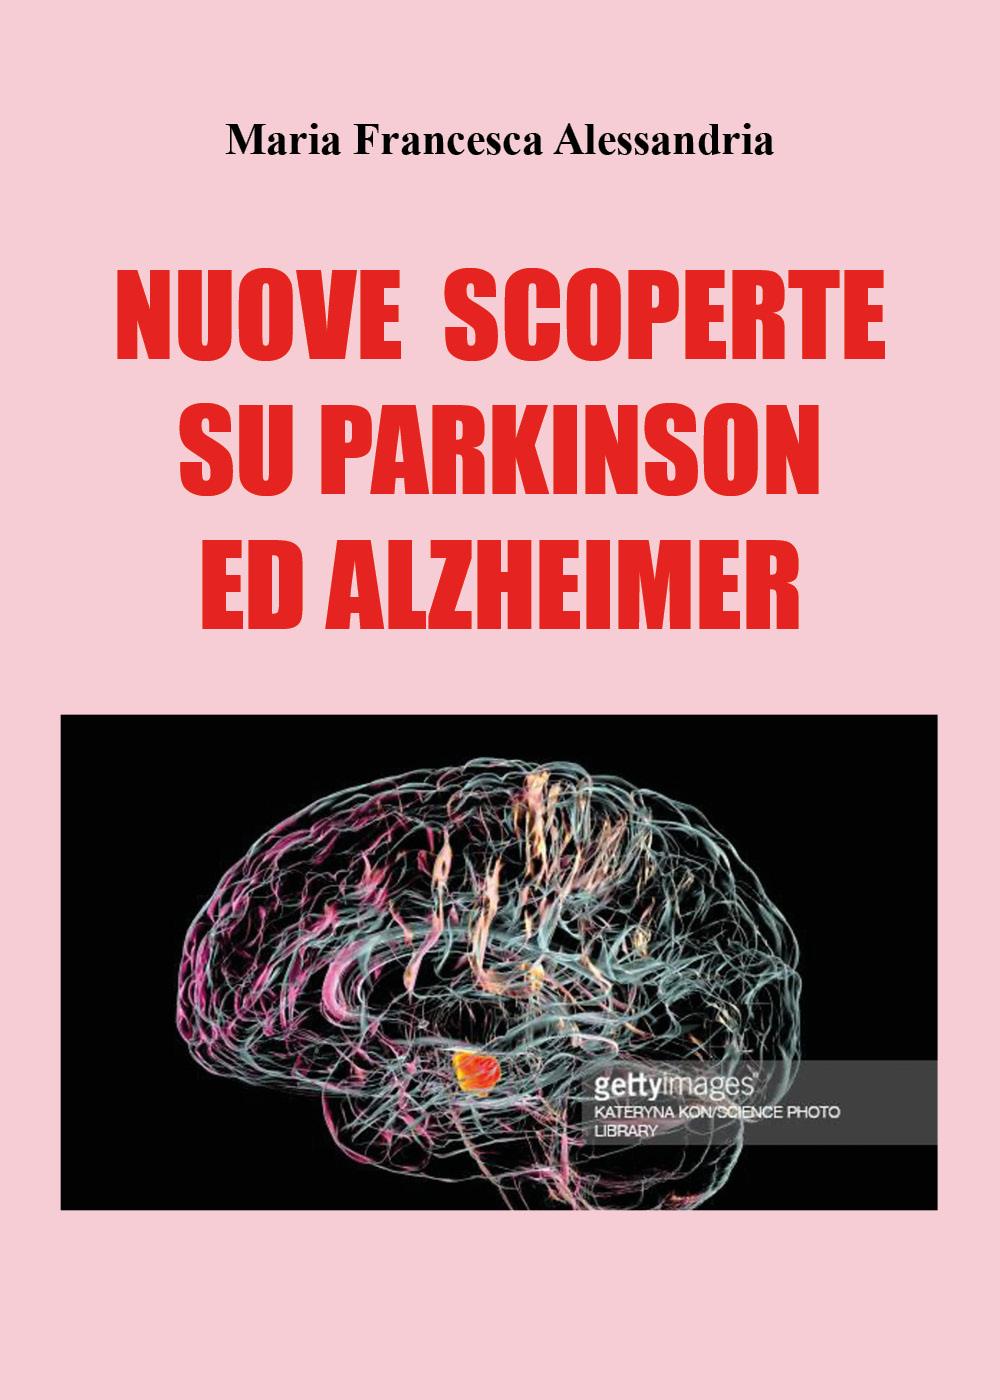 Nuove scoperte sul Parkinson e Alzheimer